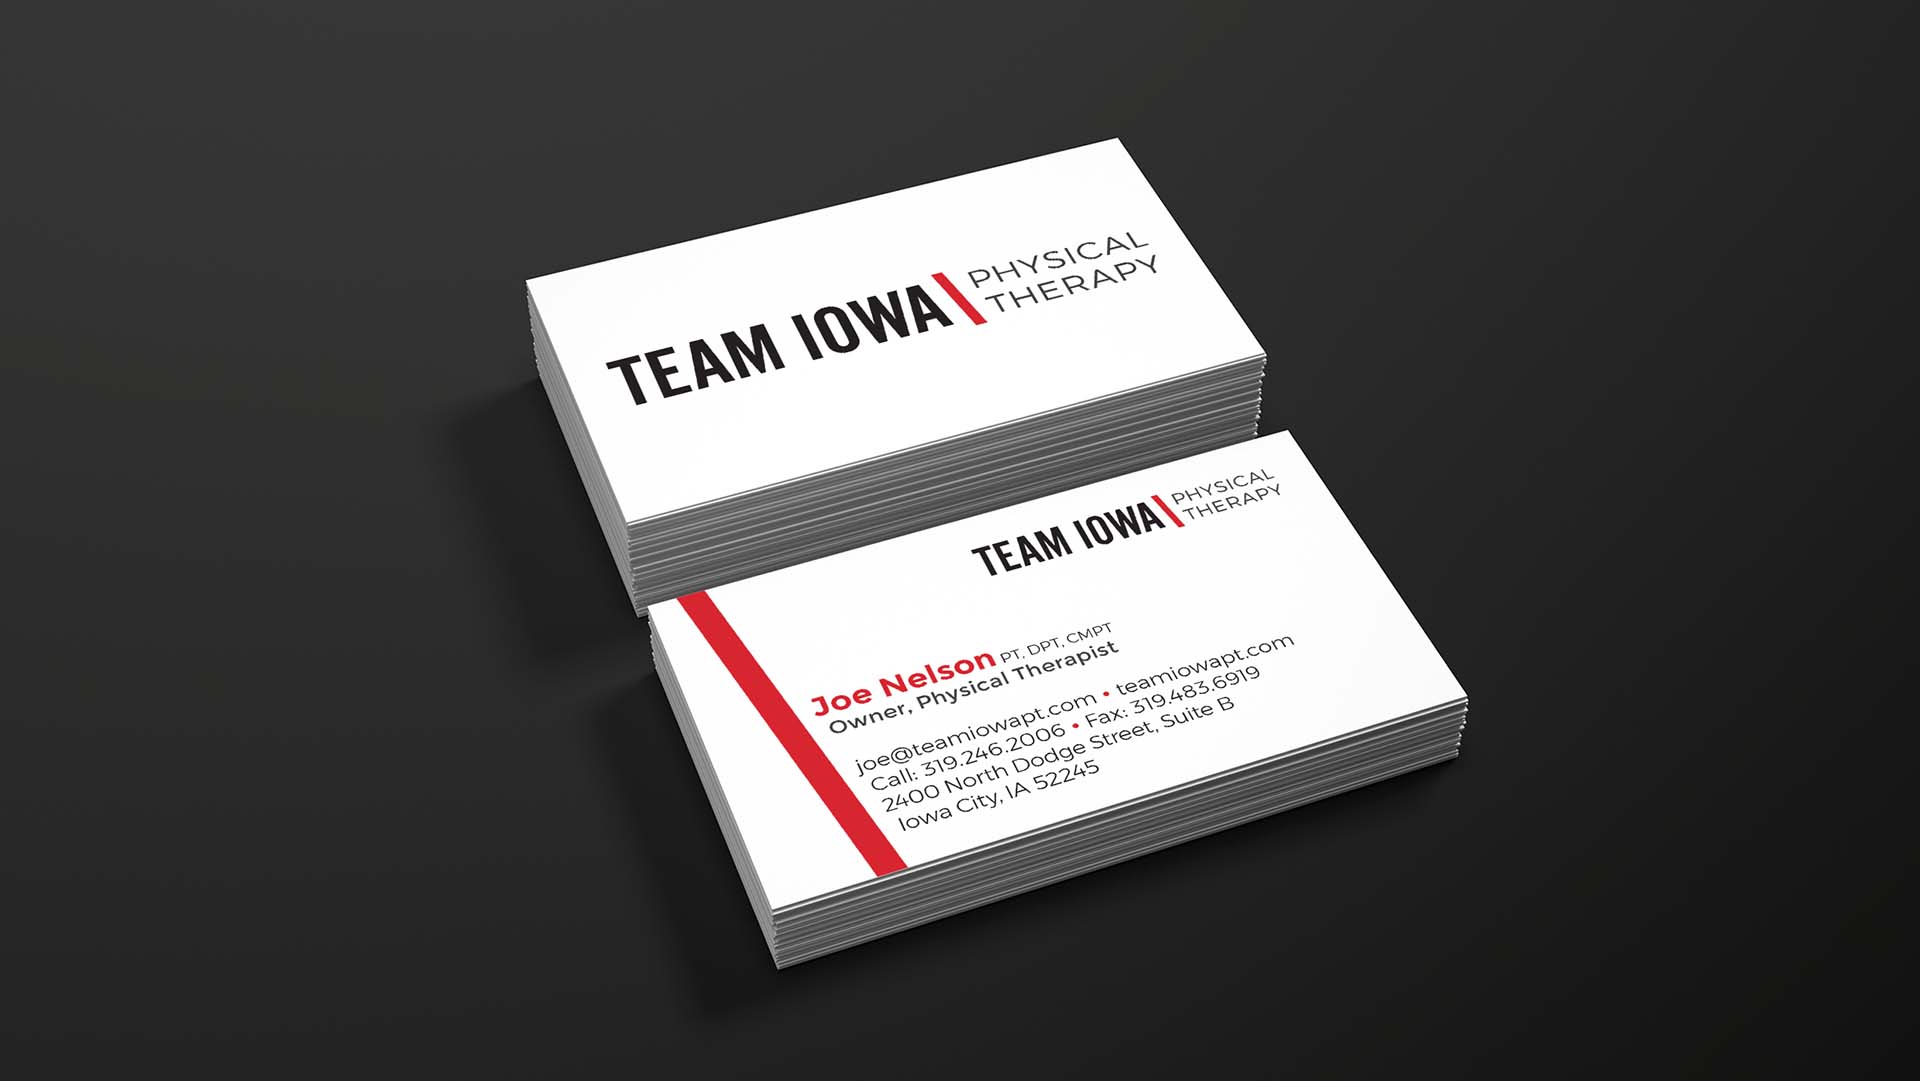 Team Iowa Business Cards